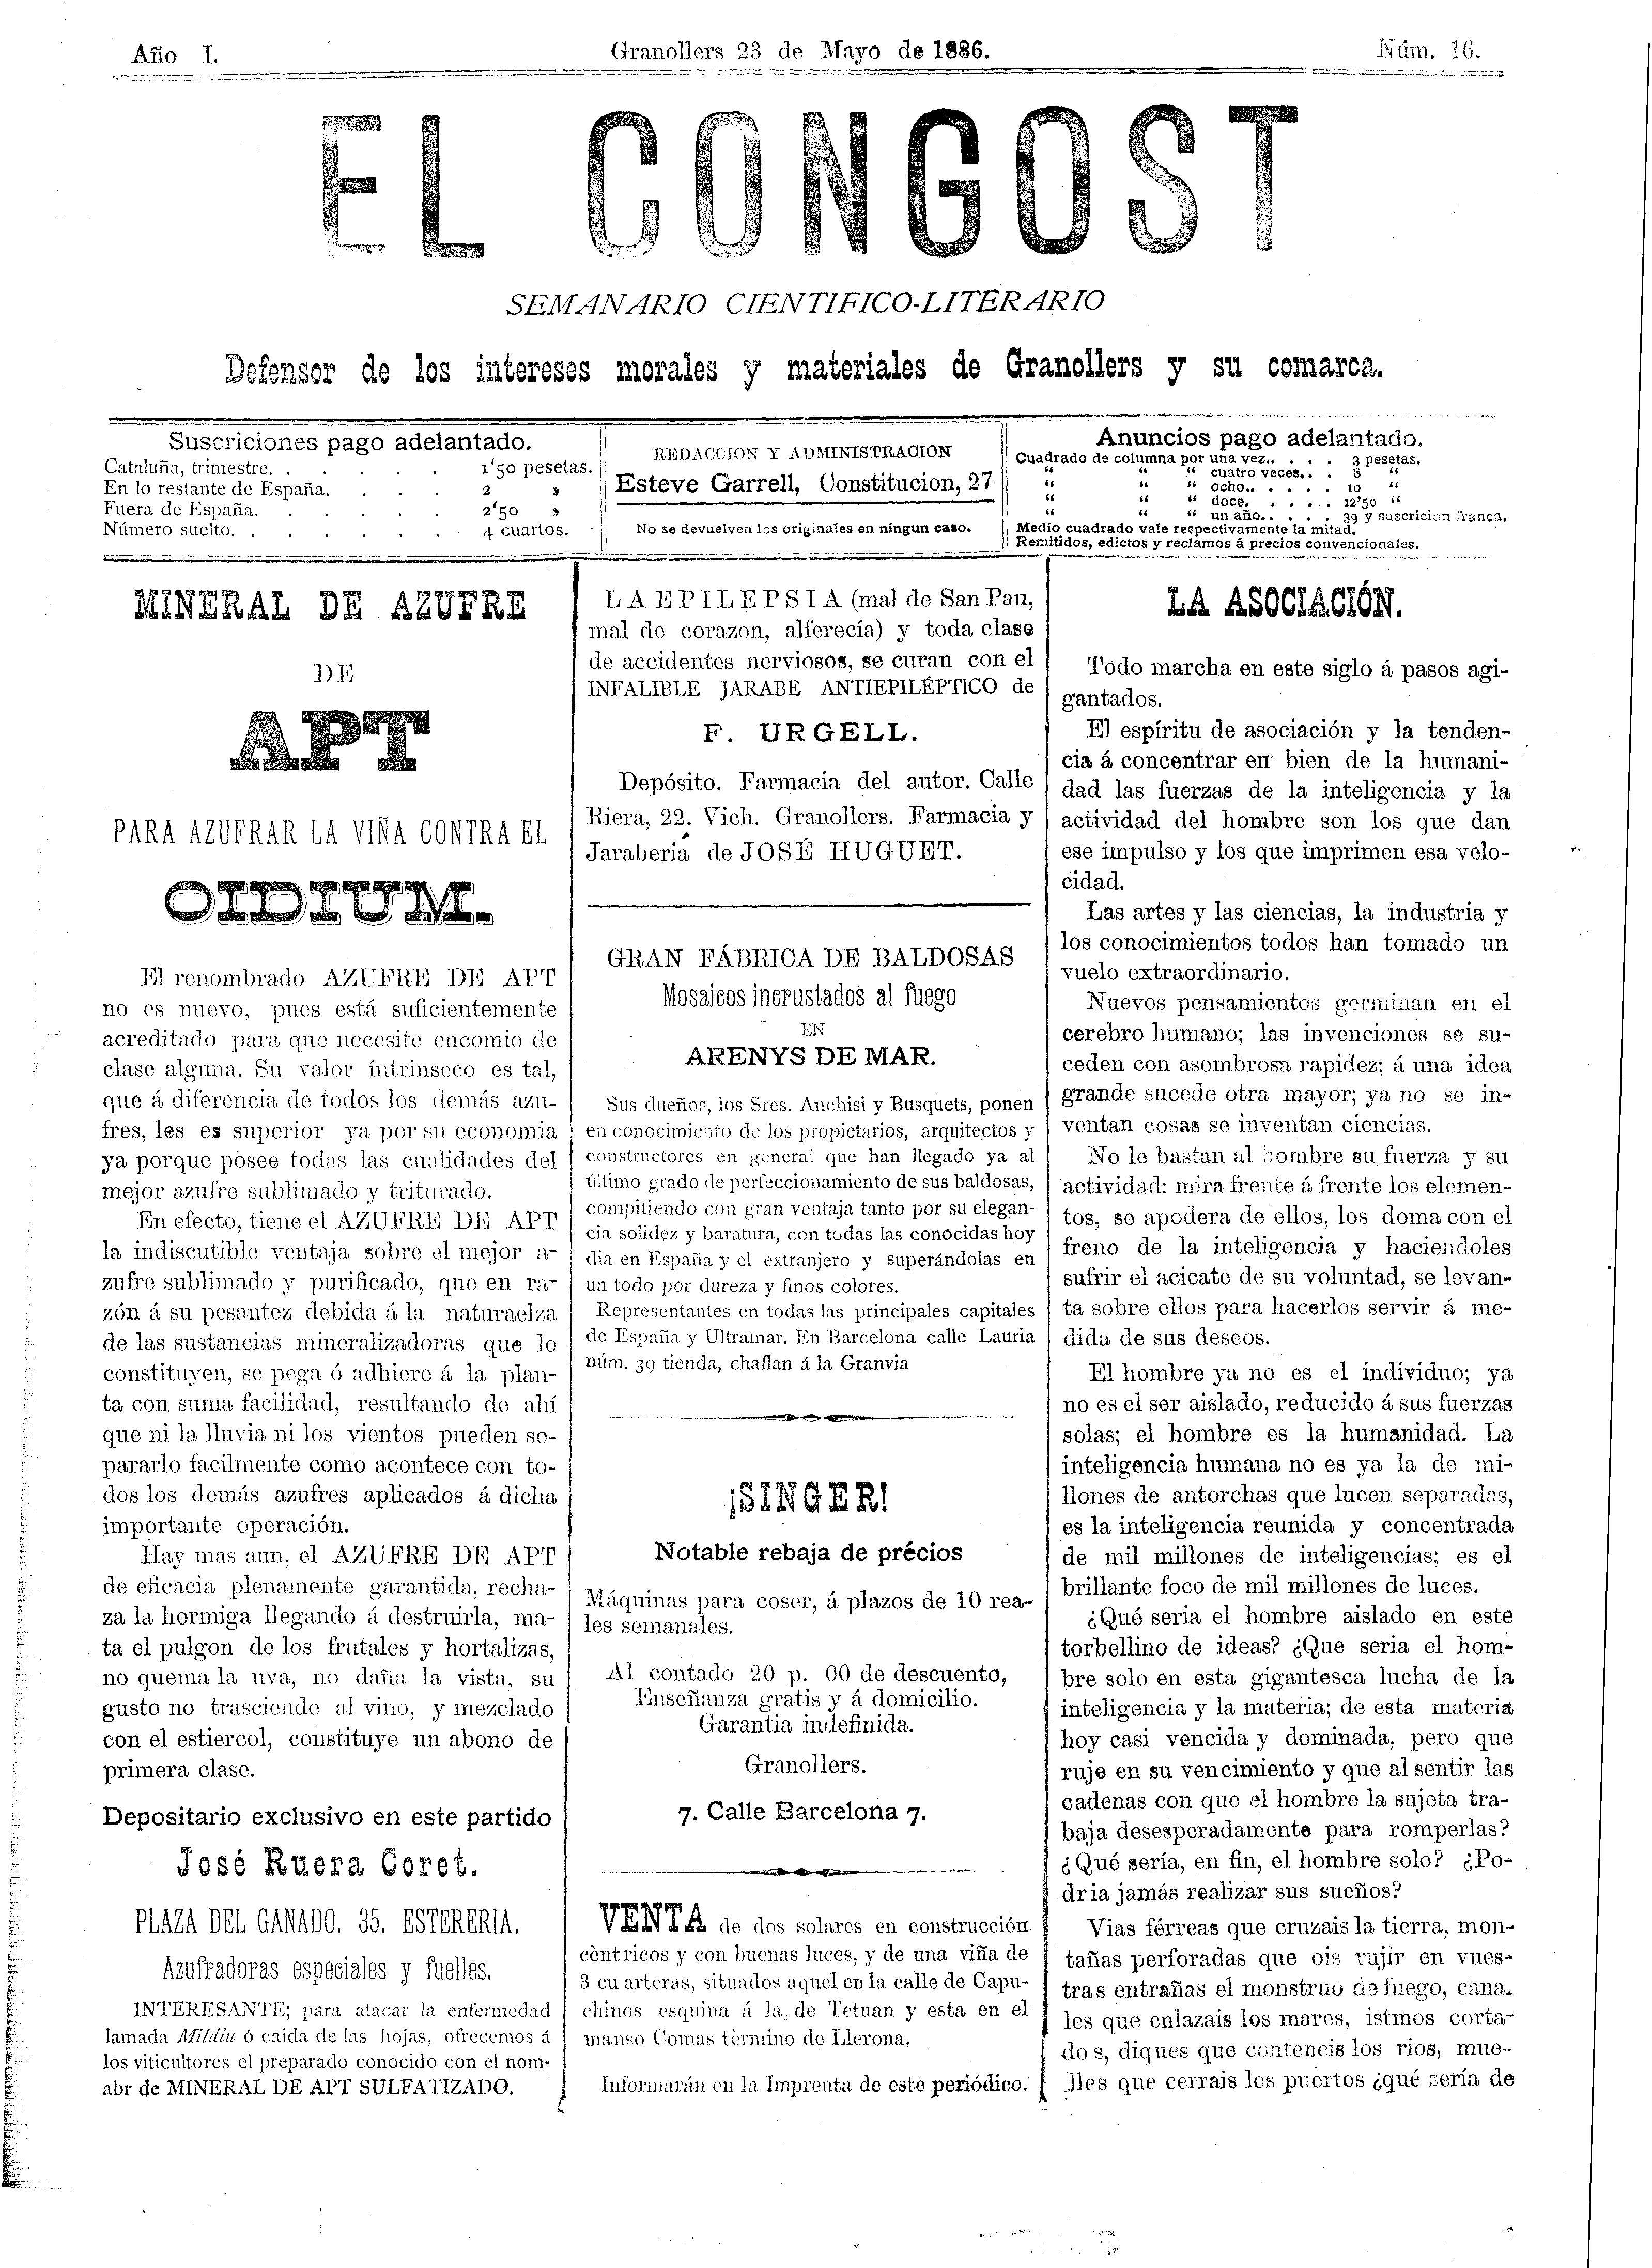 El Congost, 23/5/1886 [Ejemplar]